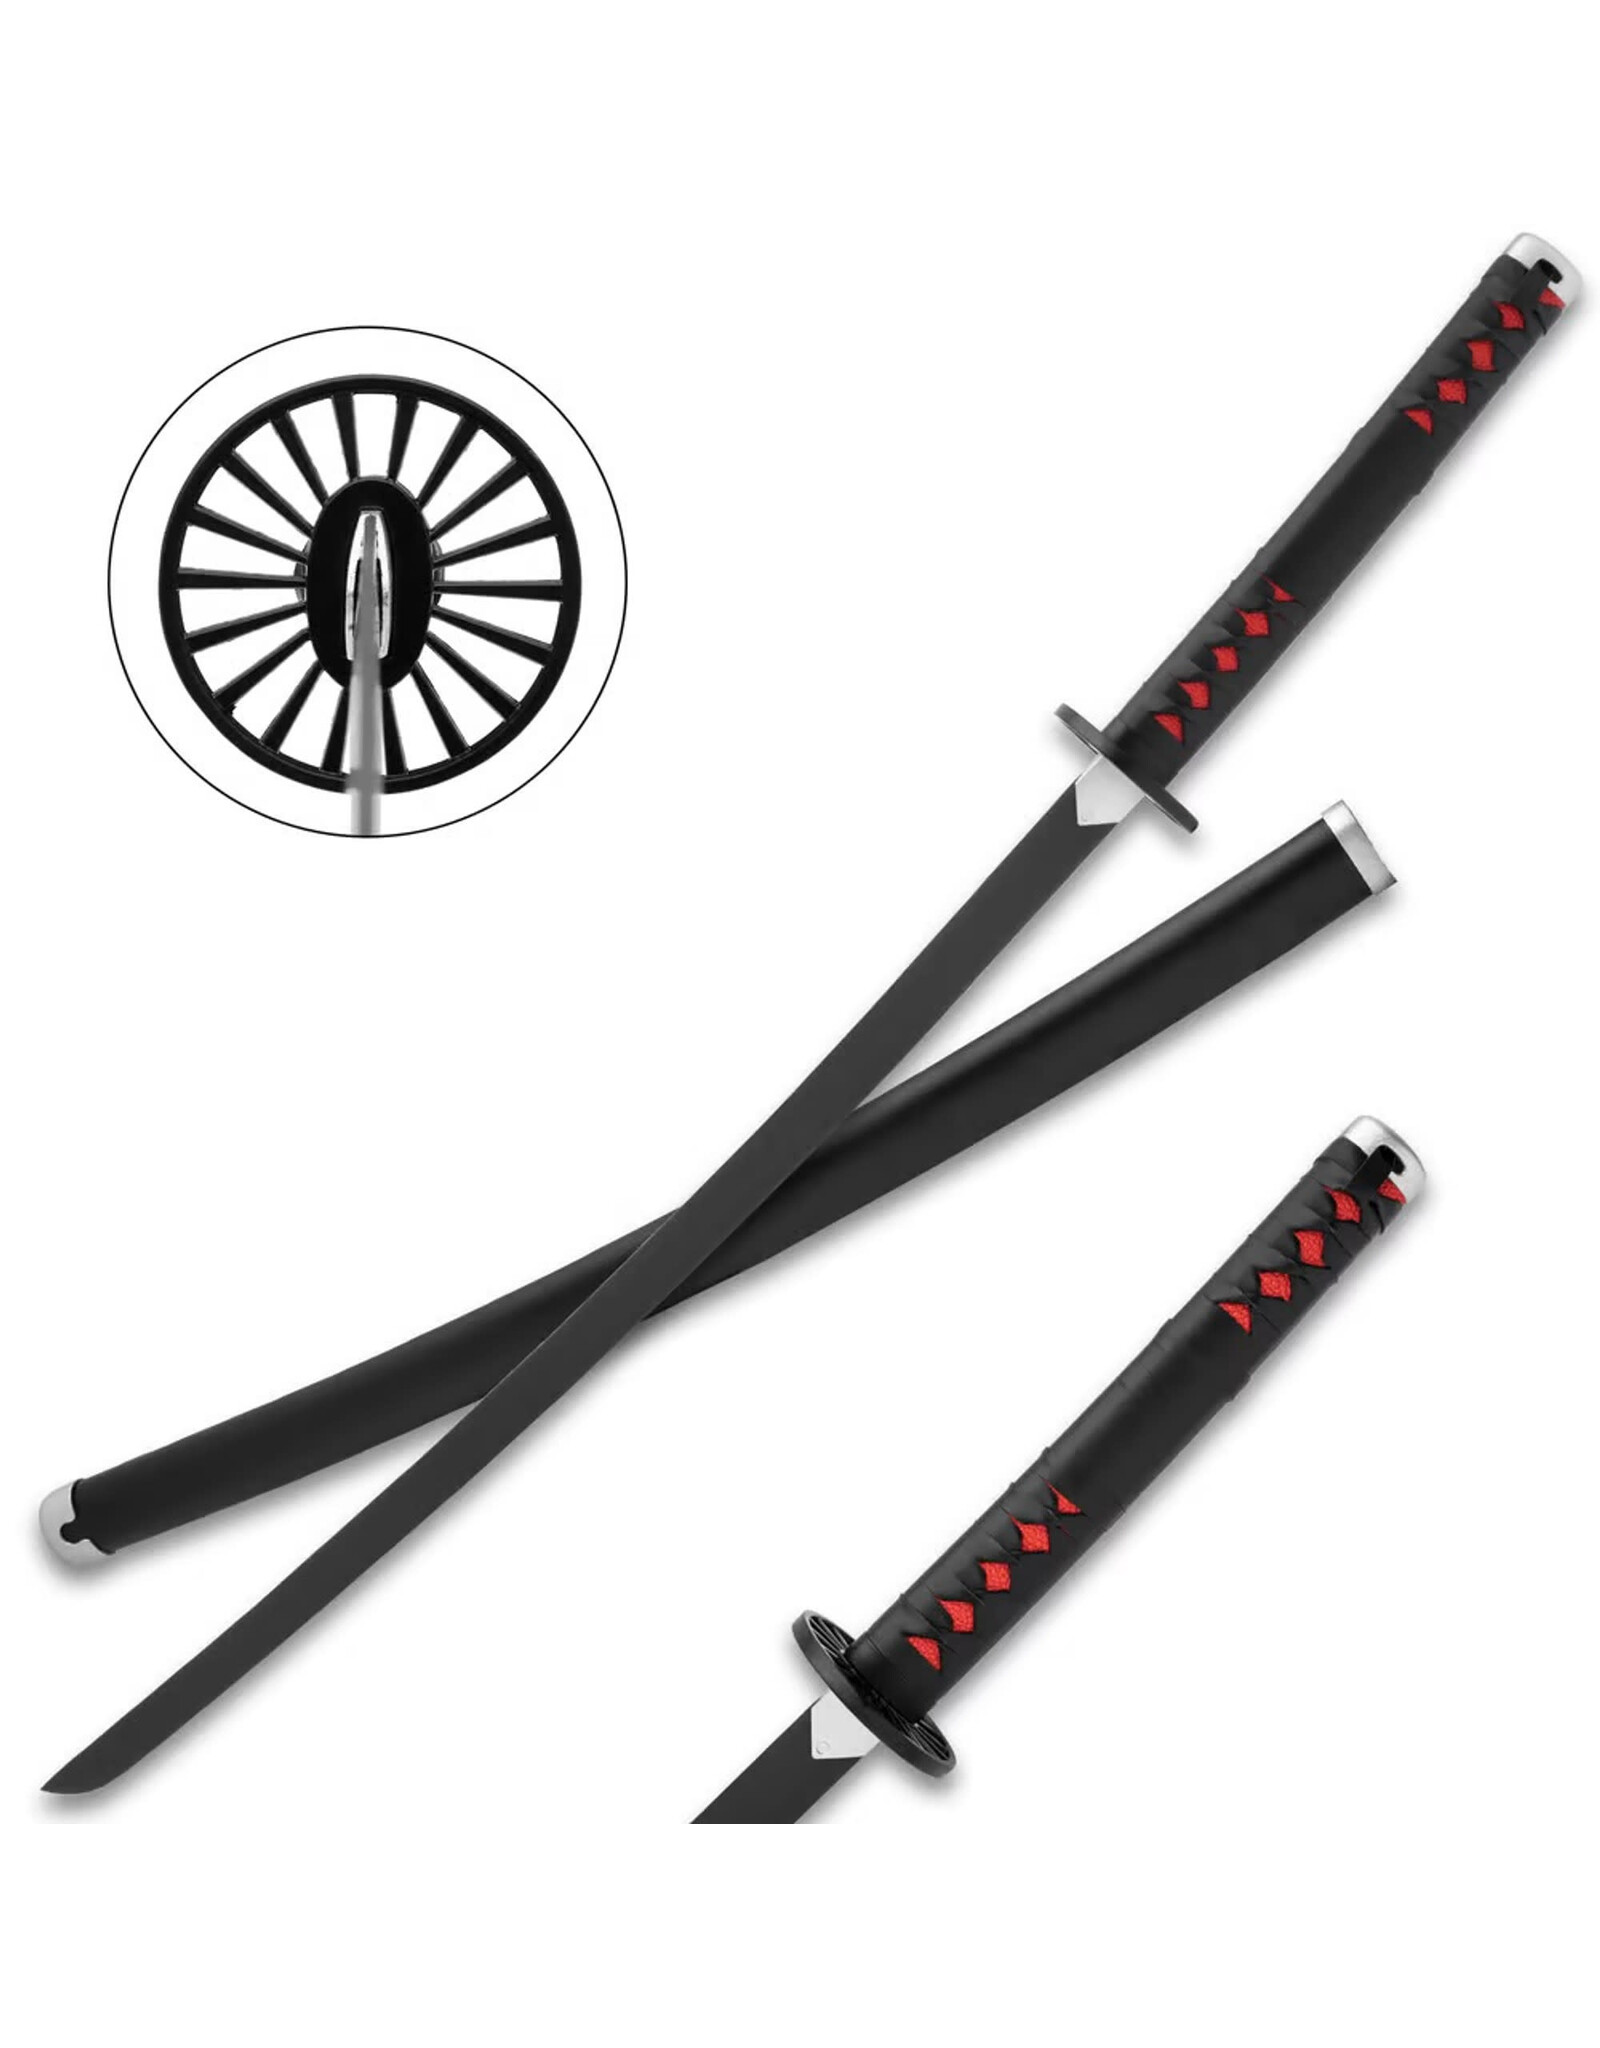 BK5957 Demon Slayer Tanjiro Kamados Nichirin Blade - Carbon Steel Blade, Wooden Handle - Length 37 1/2"